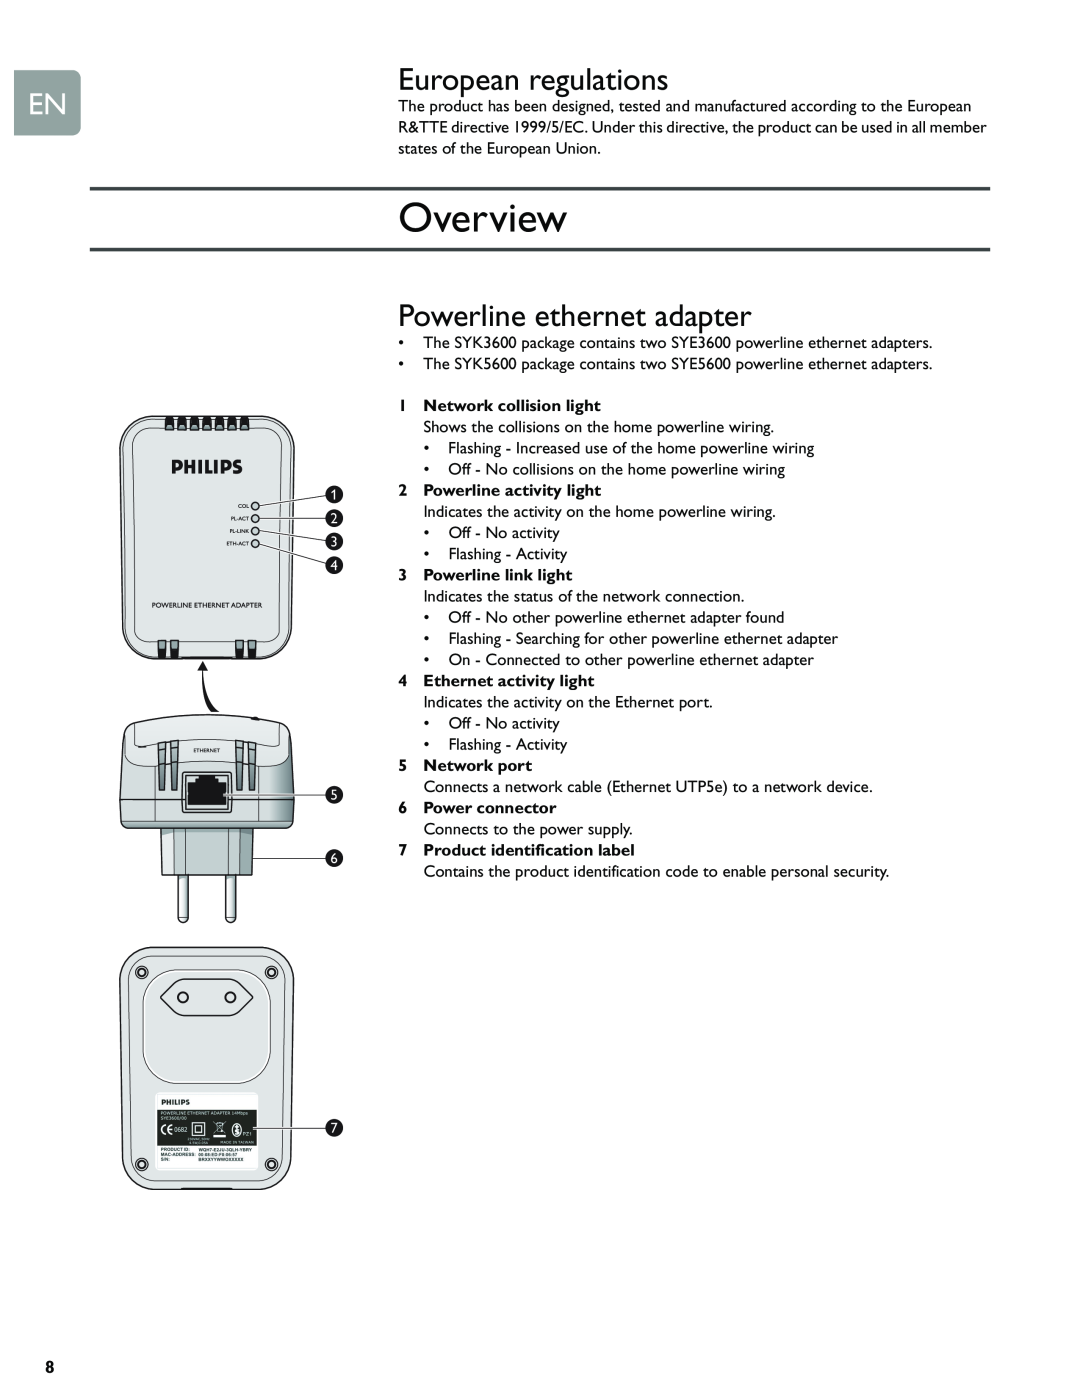 Philips SYE5600 Overview, European regulations, Powerline ethernet adapter, Network collision light, Powerline link light 